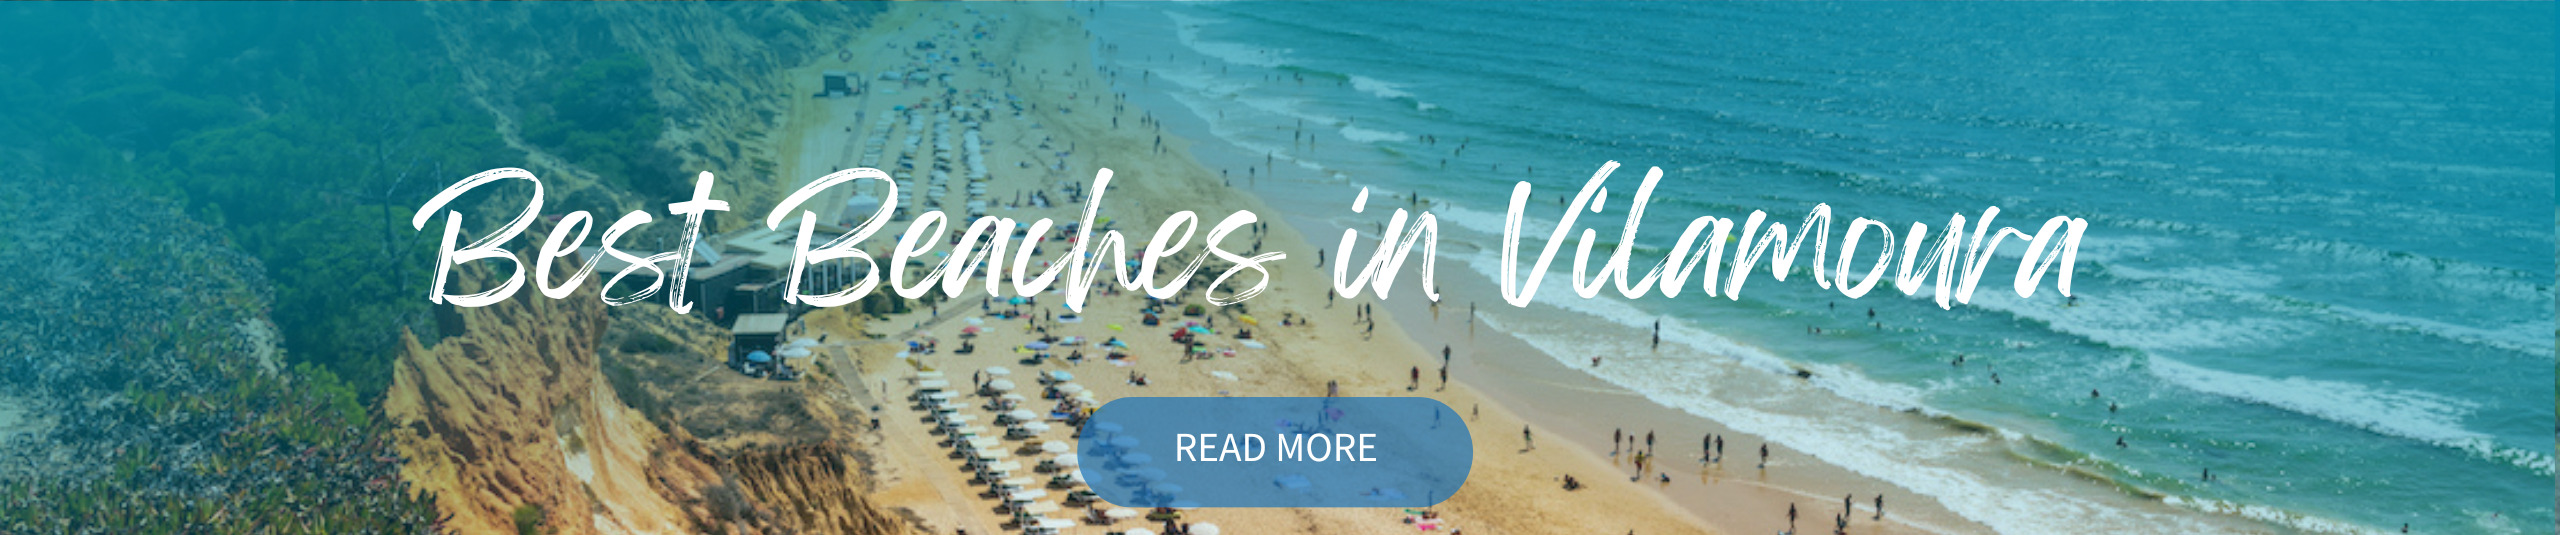 Best Beaches in Vilamoura CTA Web Banner